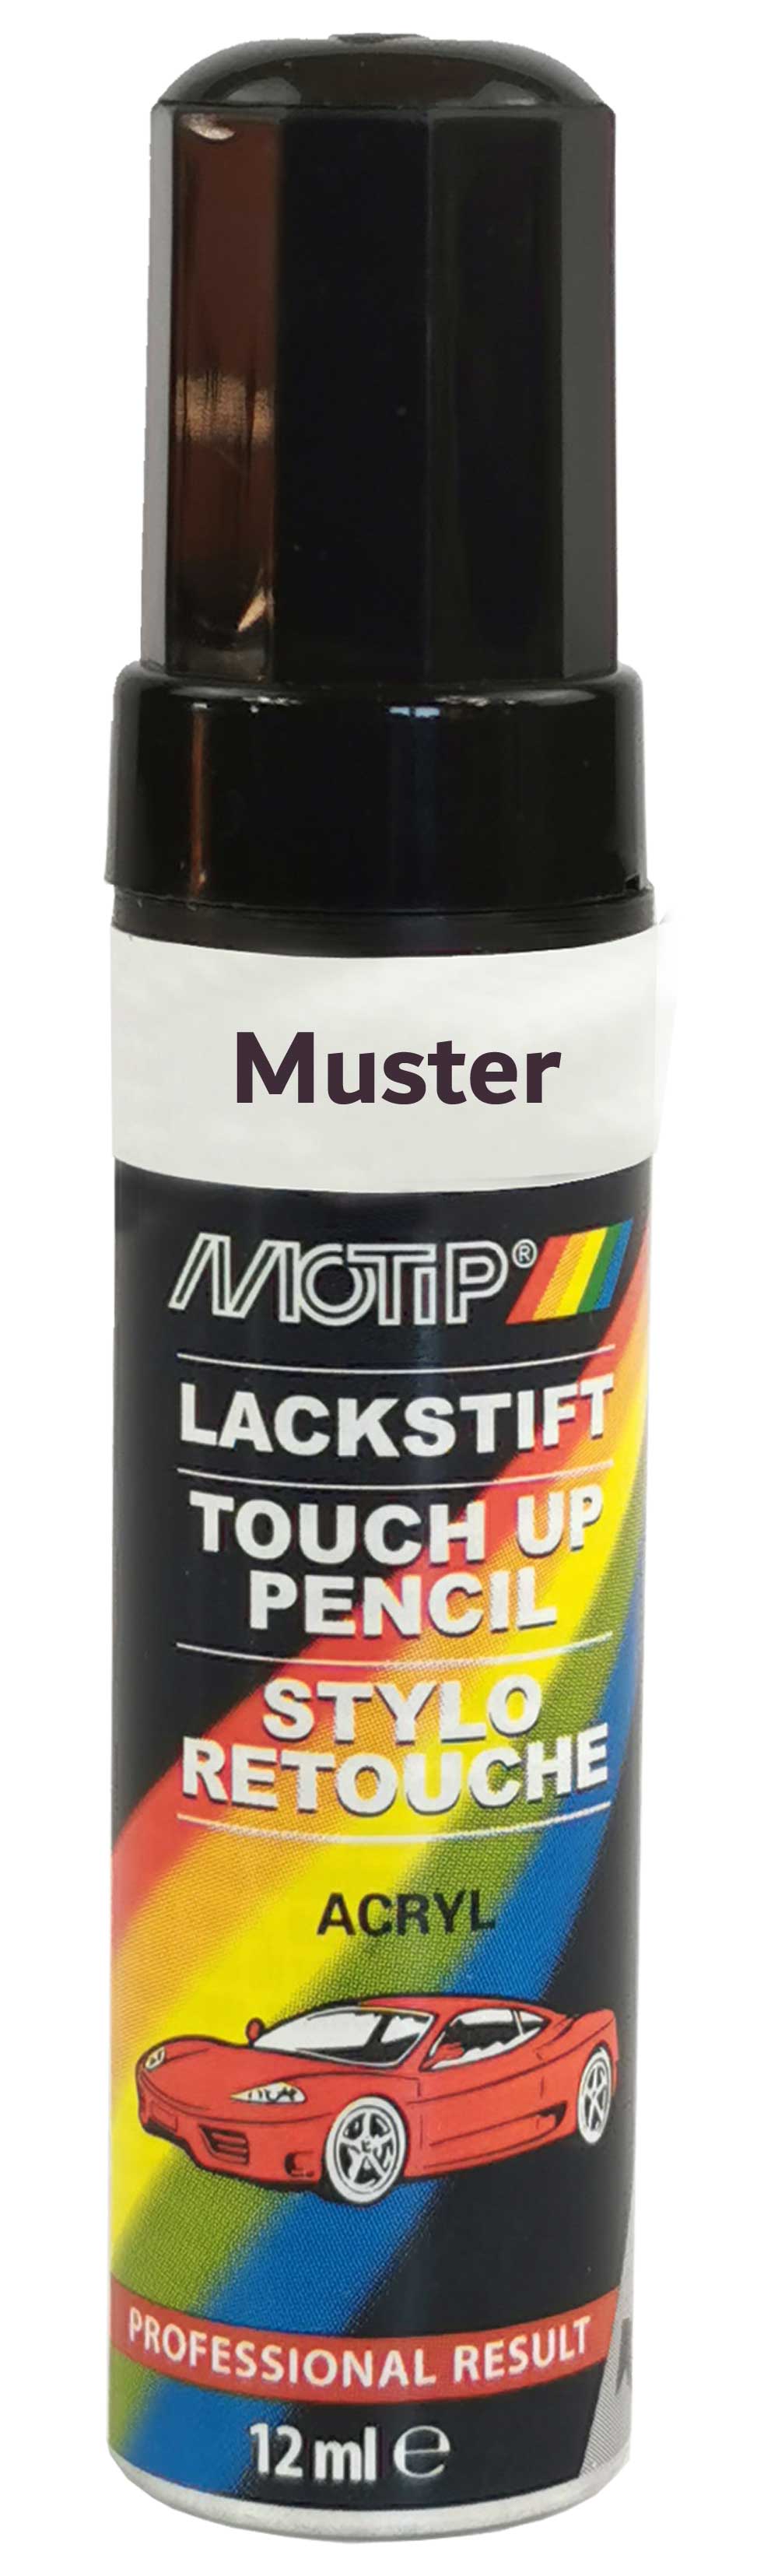 Motip Lack-Stift grau 12ml 951082